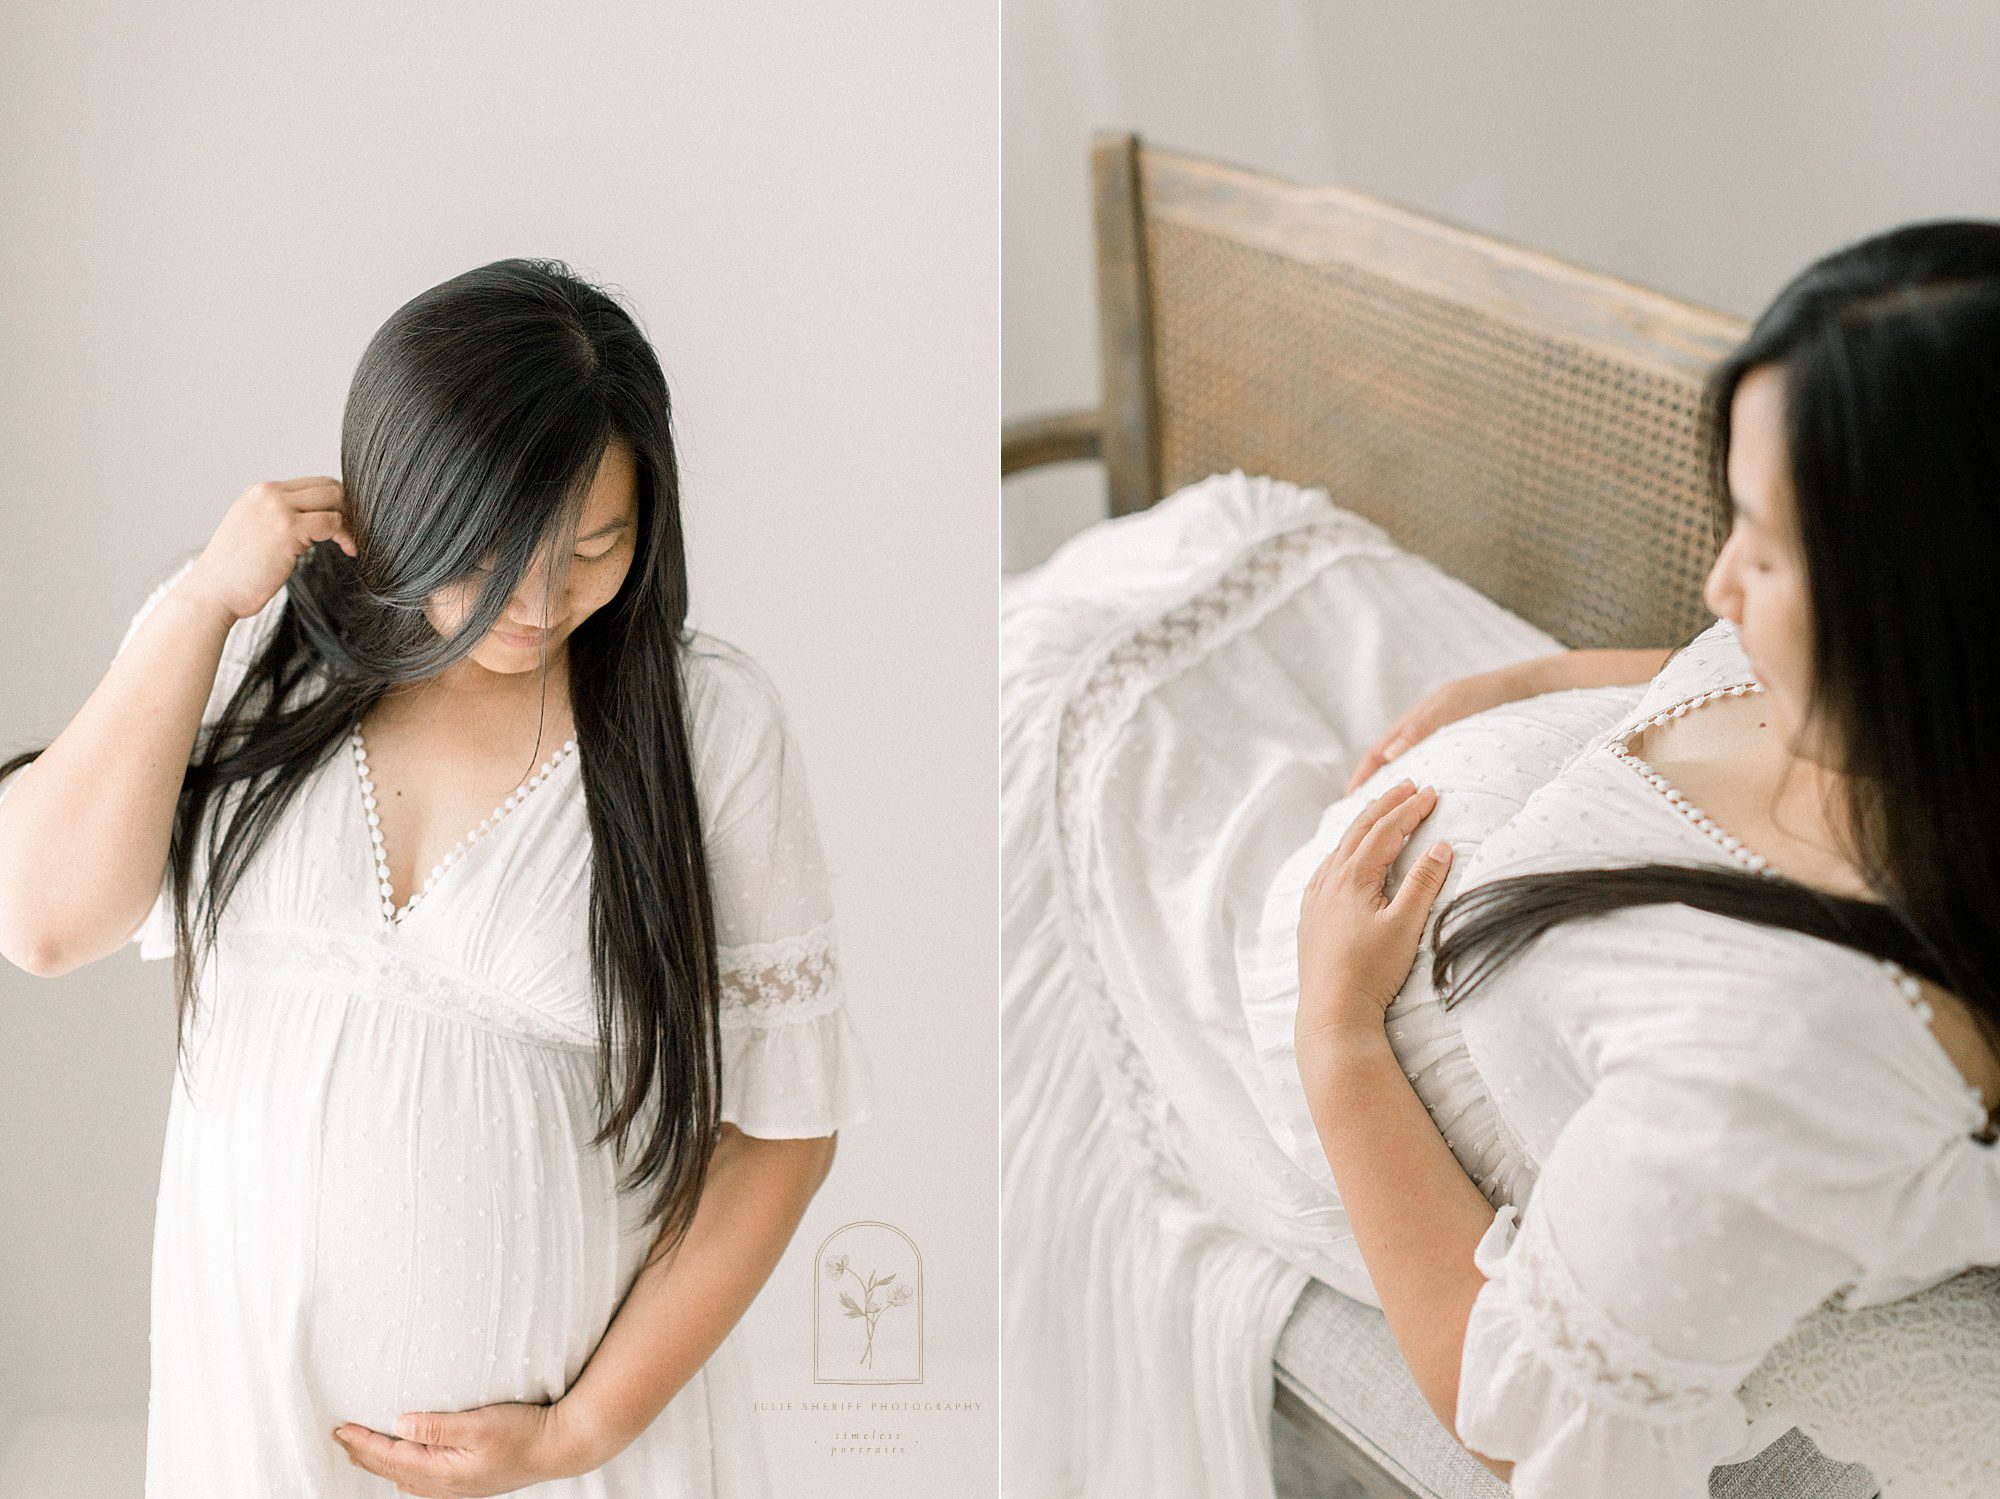 Utah Maternity photos in white studio with white dress